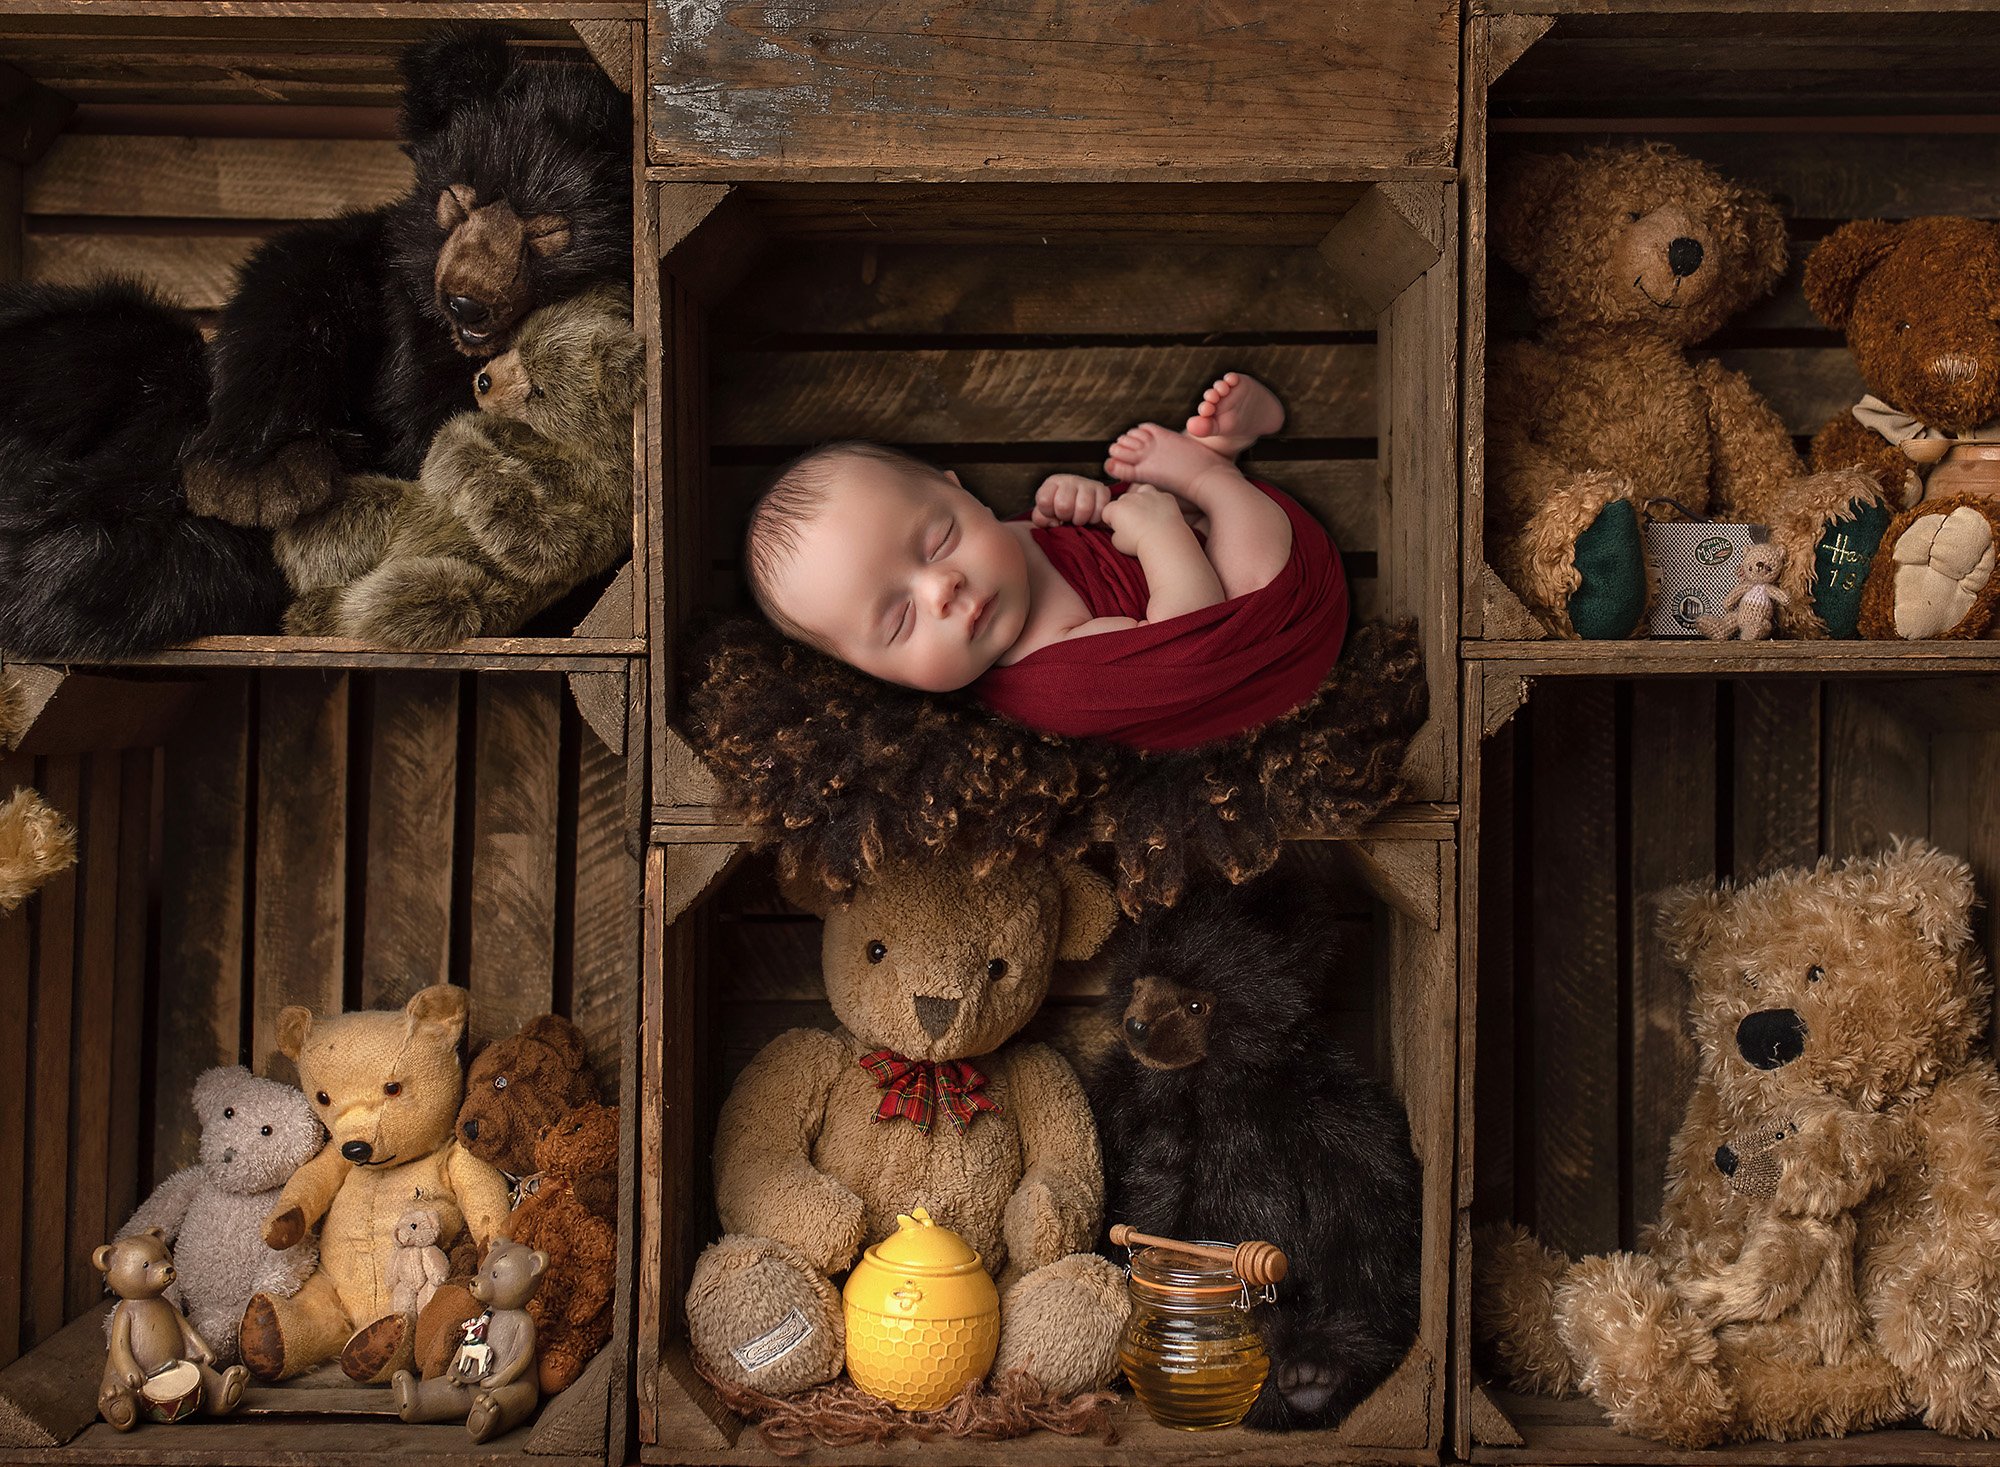 award winning newborn photography newborn baby boy tucked away in a rustic cubby full of bear stuffed animals and honey pots